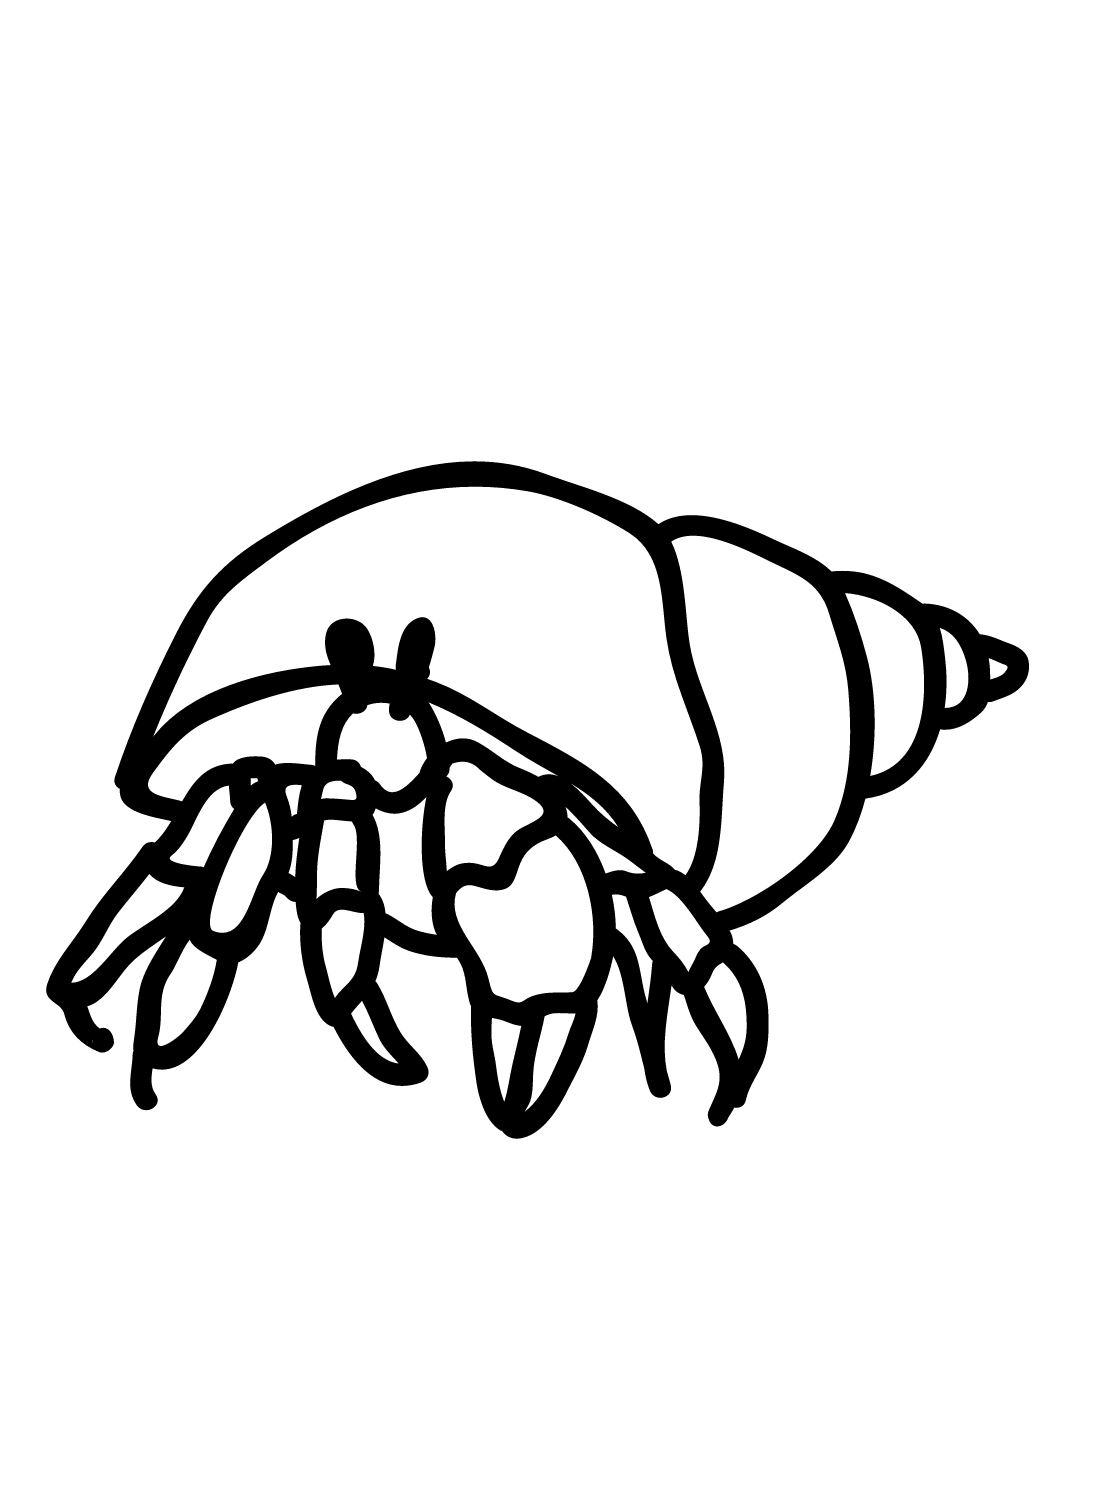 Print Hermit Crab from Hermit Crab